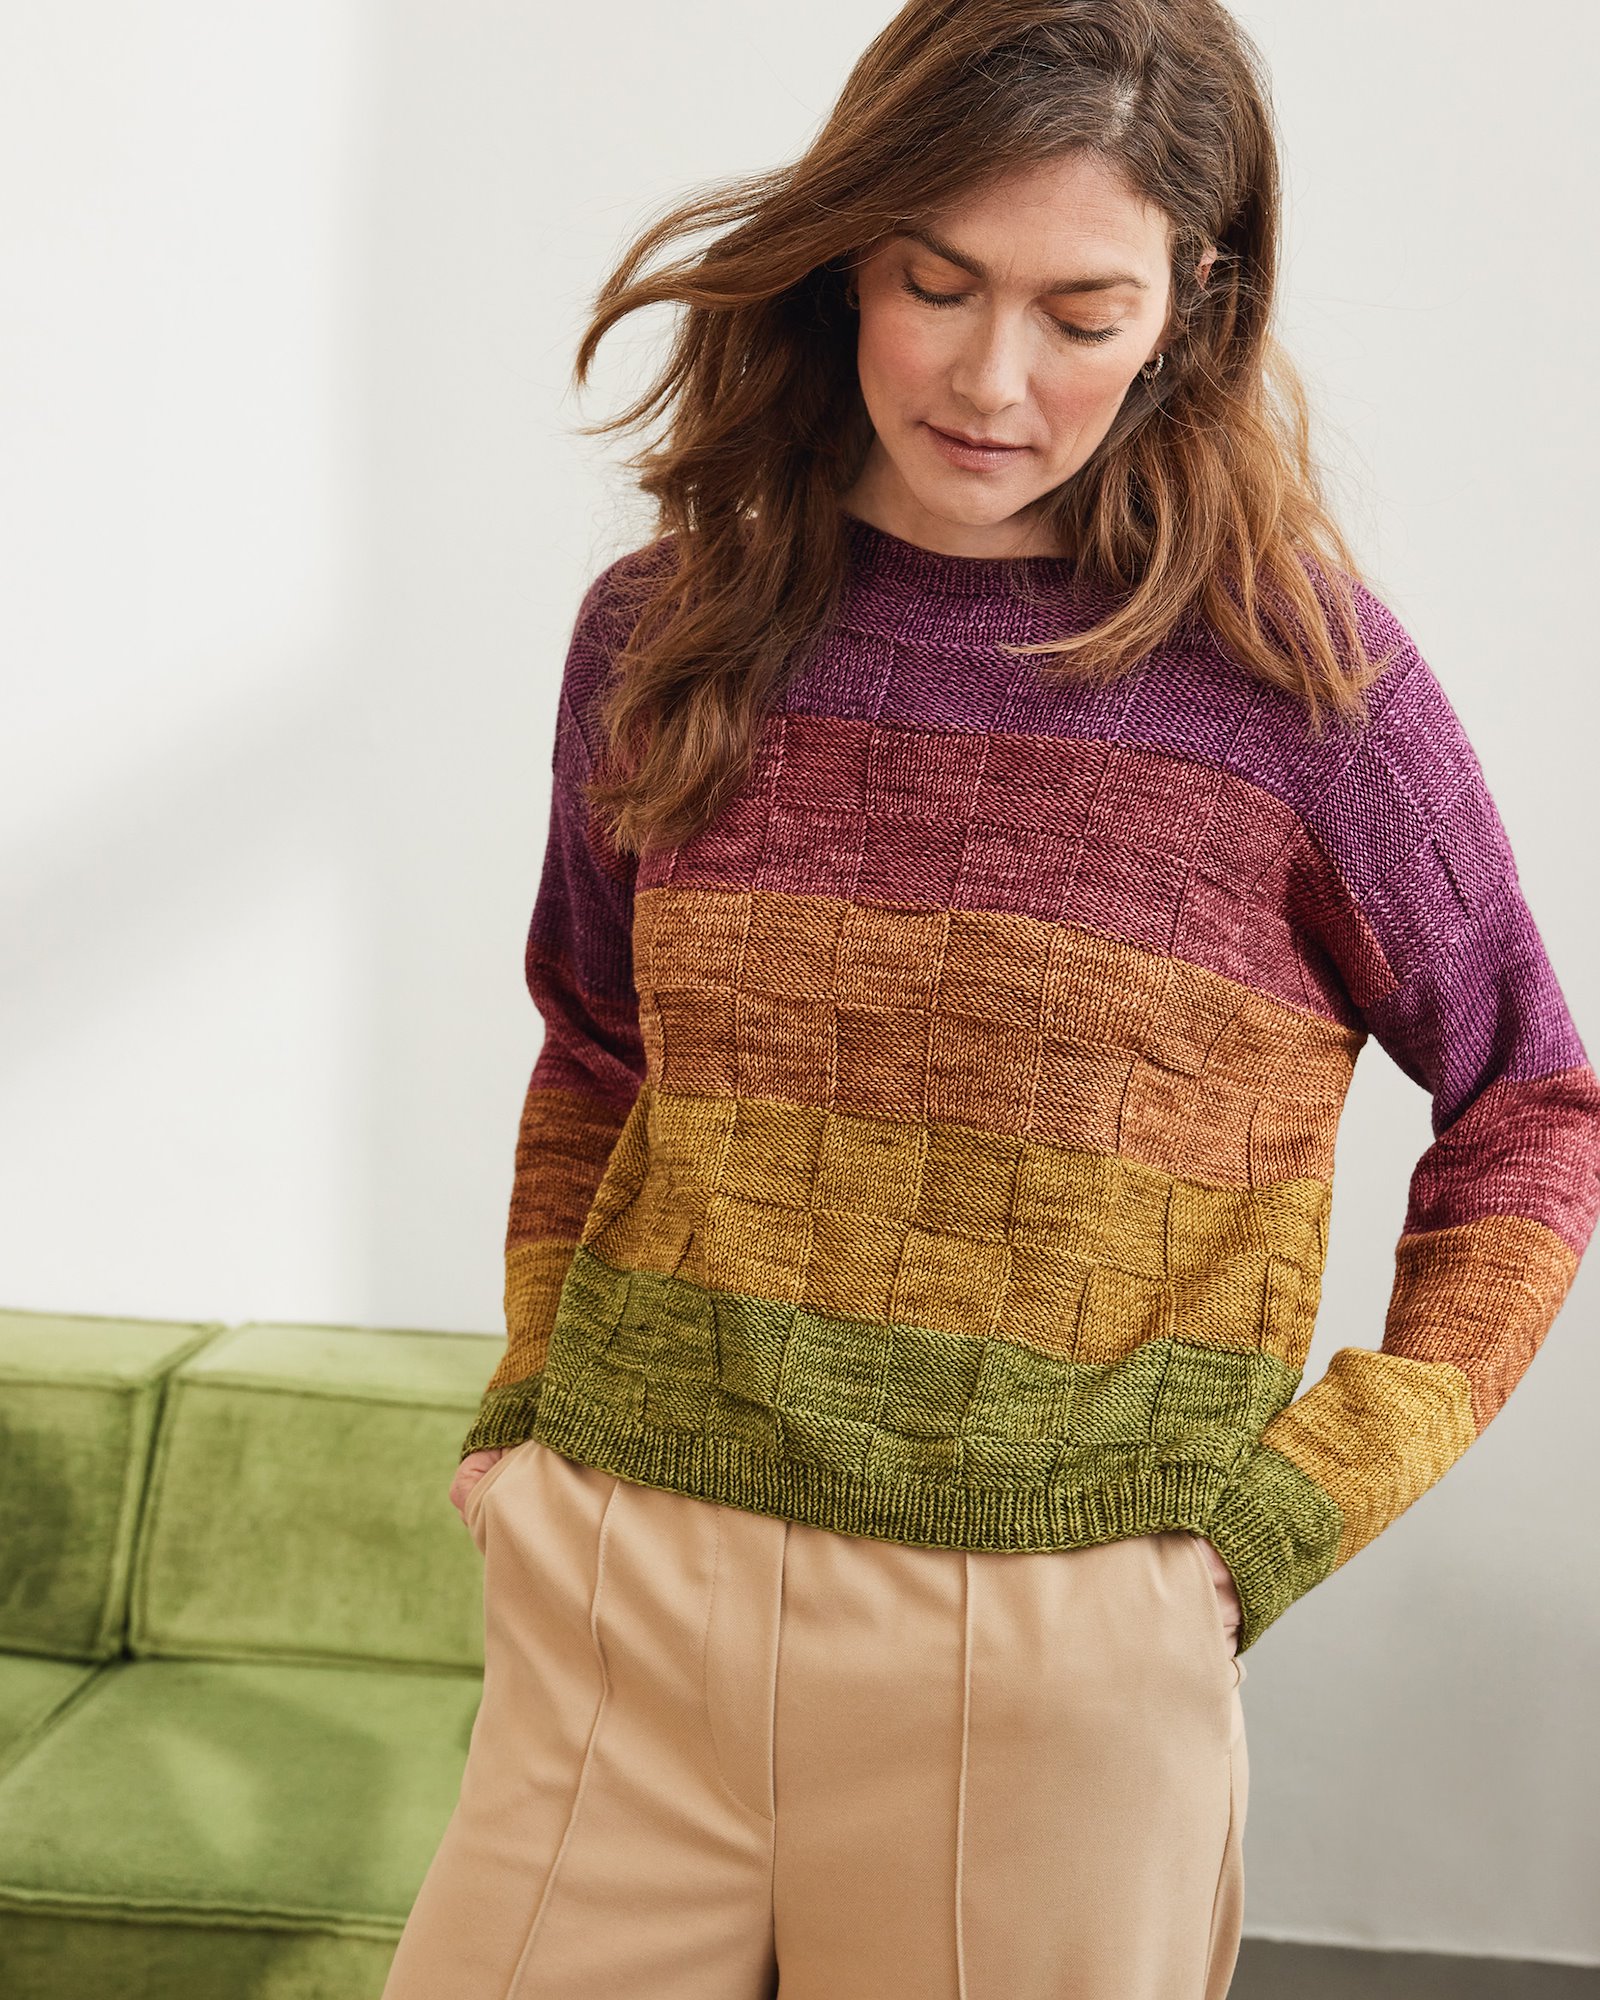 Lana Grossa yarn, knitting pattern: PULLOVER LANA2007_image.jpg